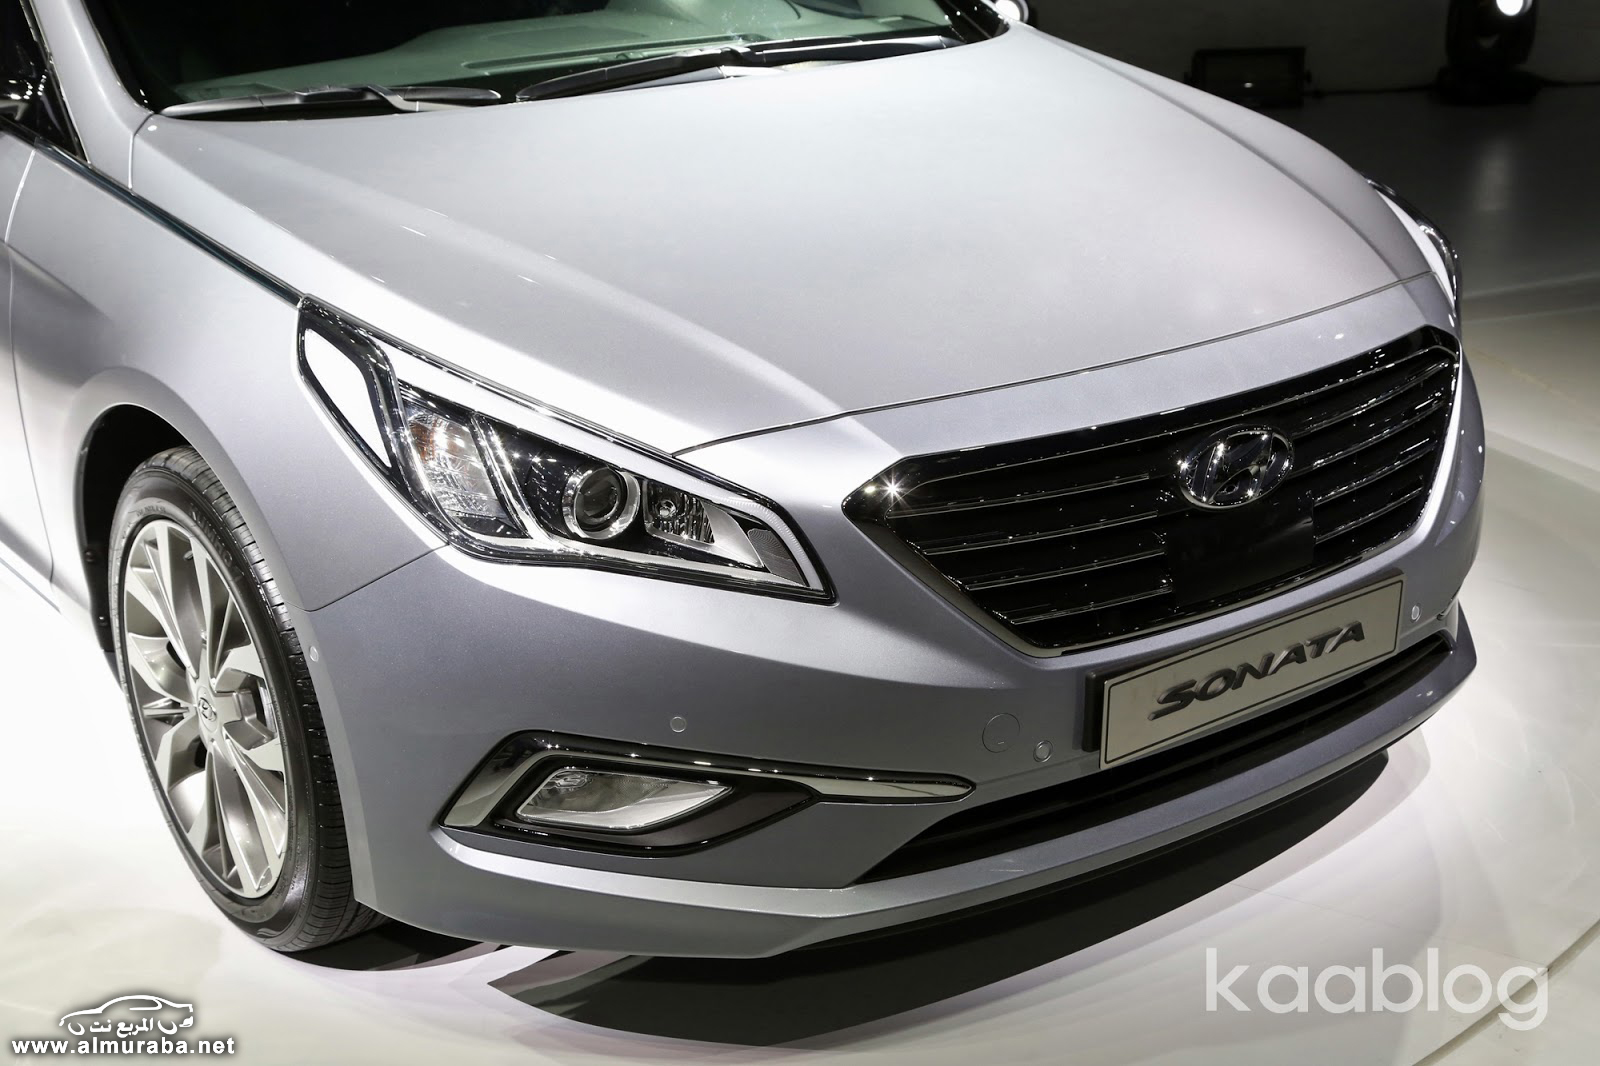 2015-Hyundai-Sonata-KDM-Carscoops9